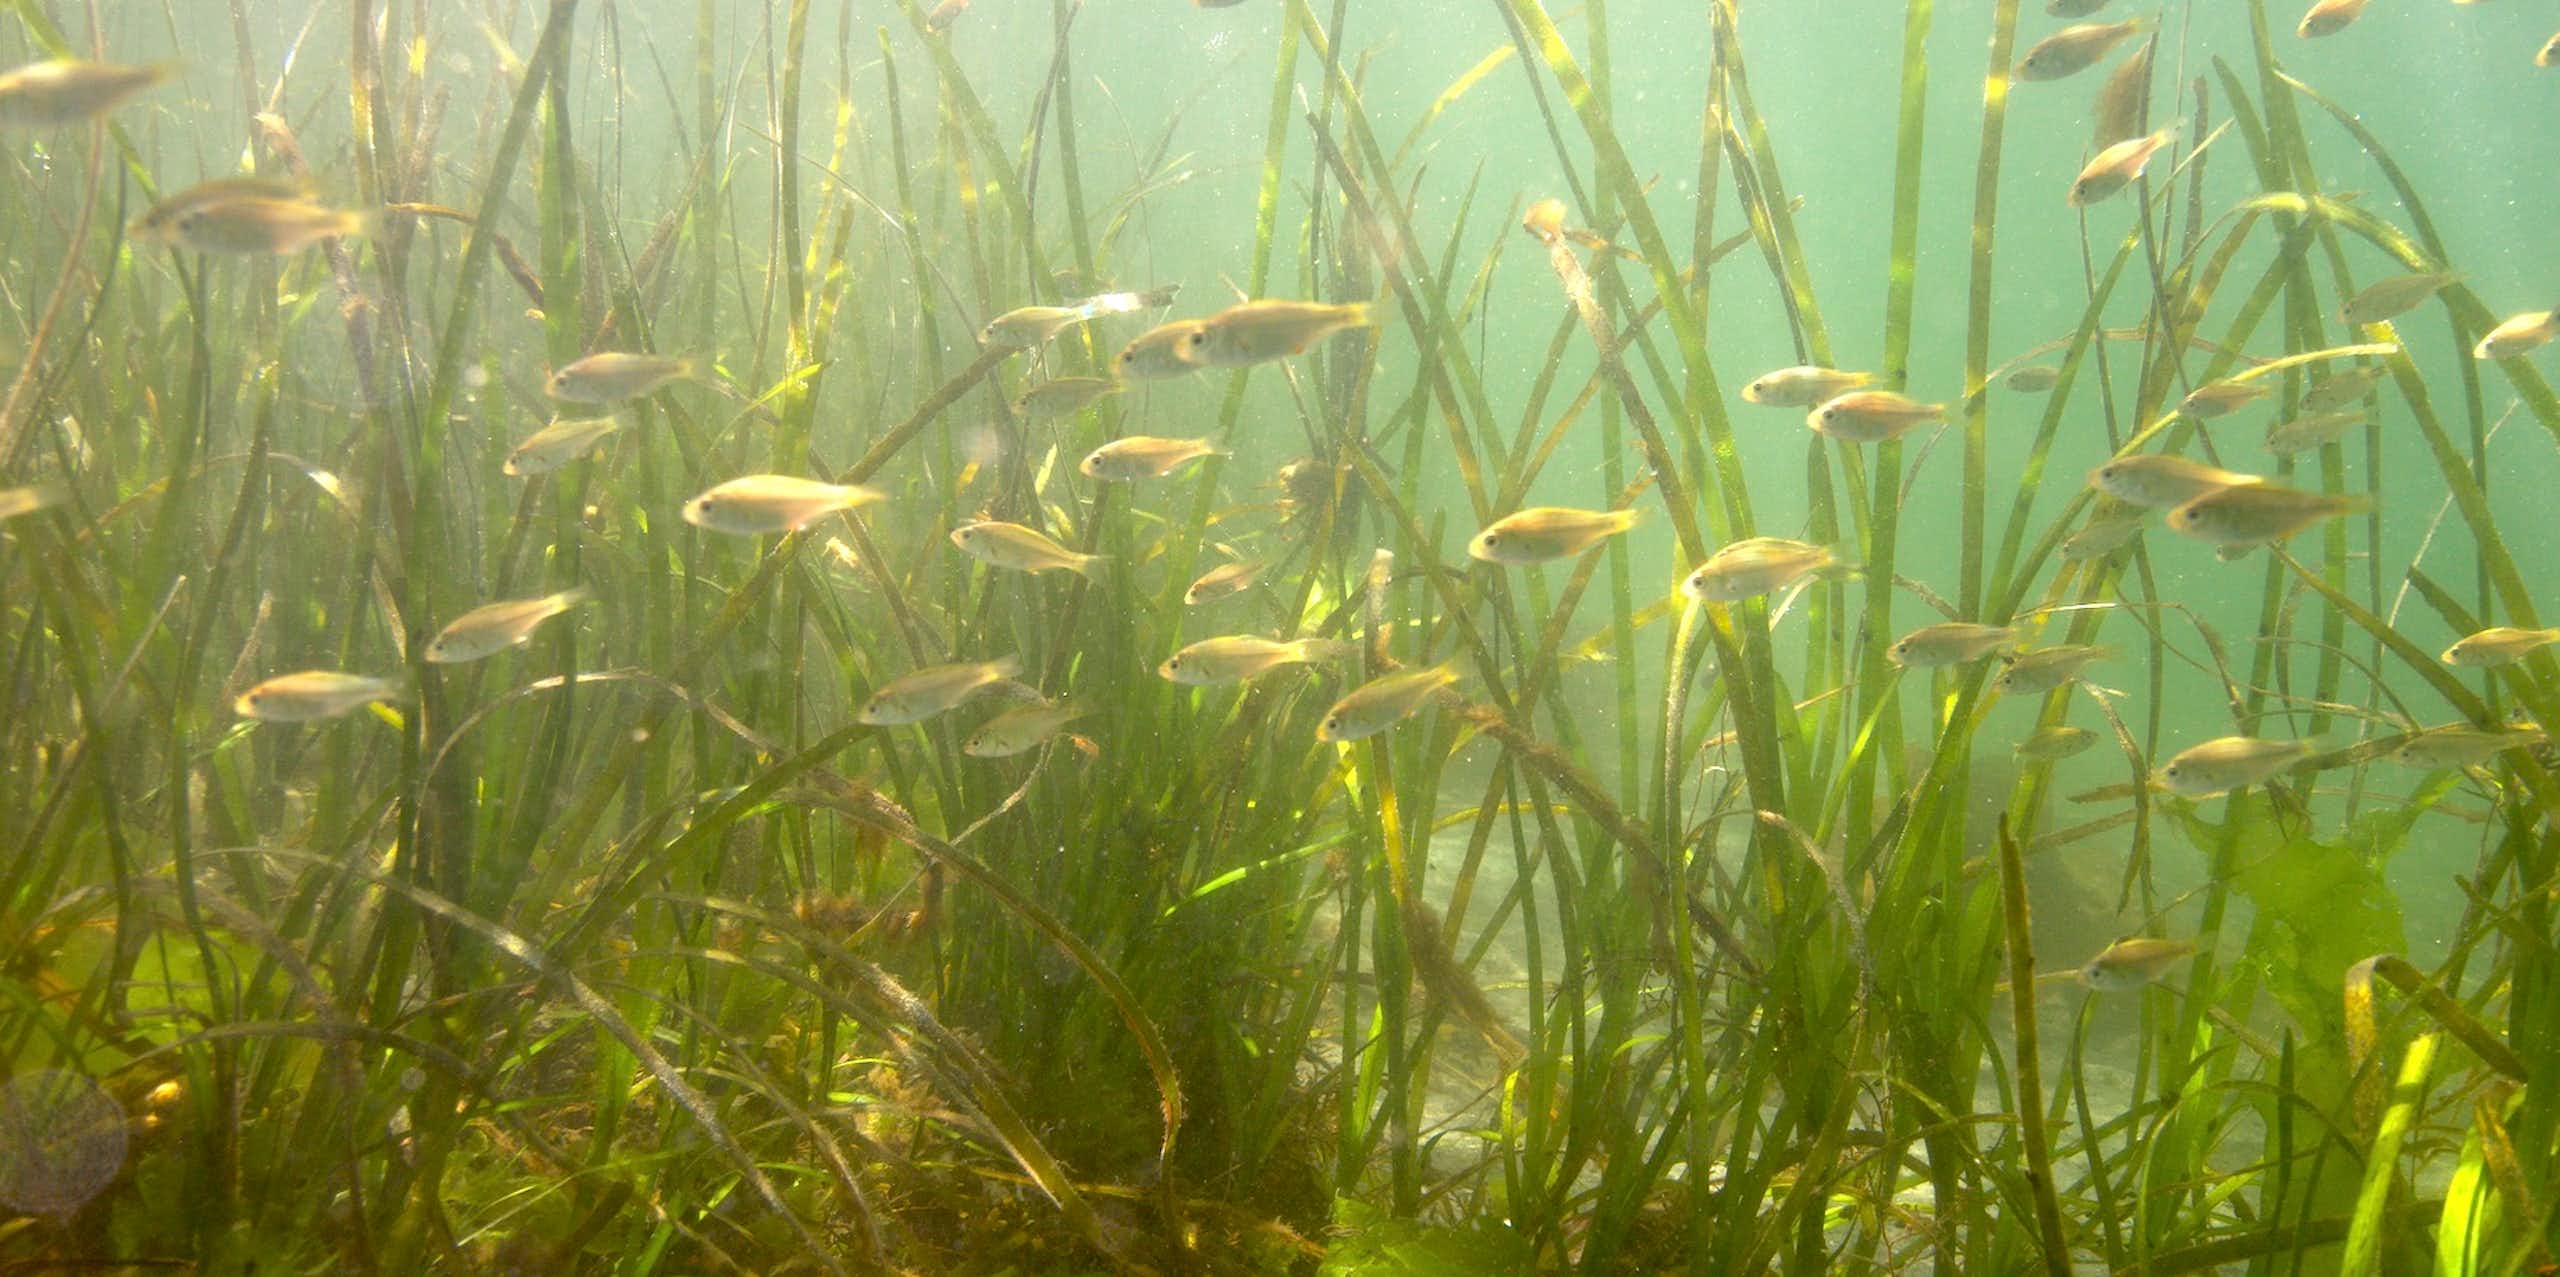 Small fish swim among eelgrass